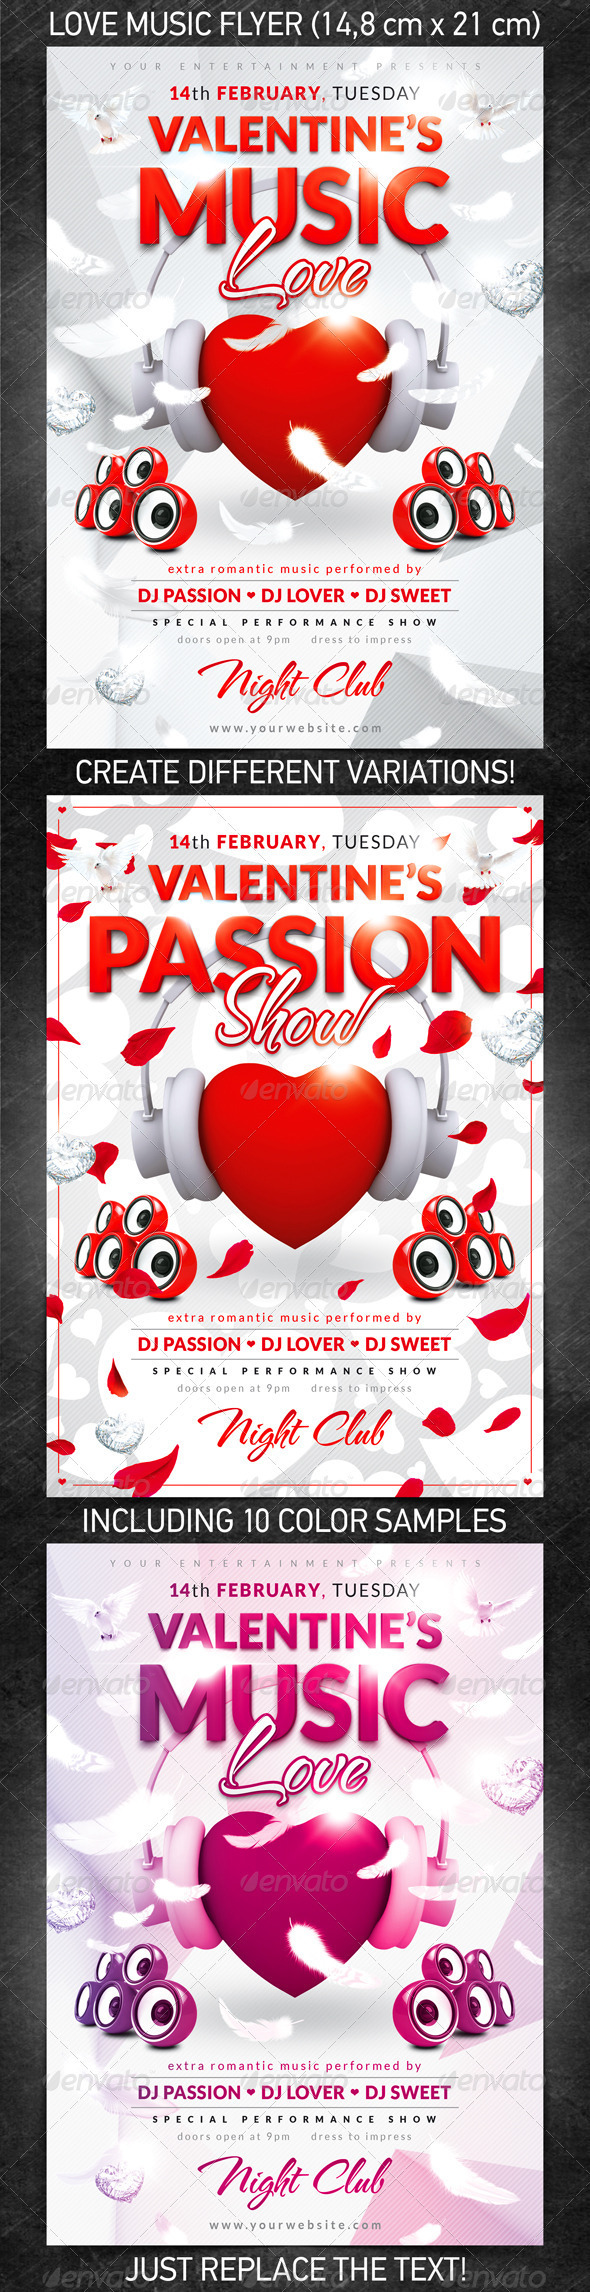 February 14 lovecard music nightclub valentines flyer template white mockup mock-up mockups mock-ups